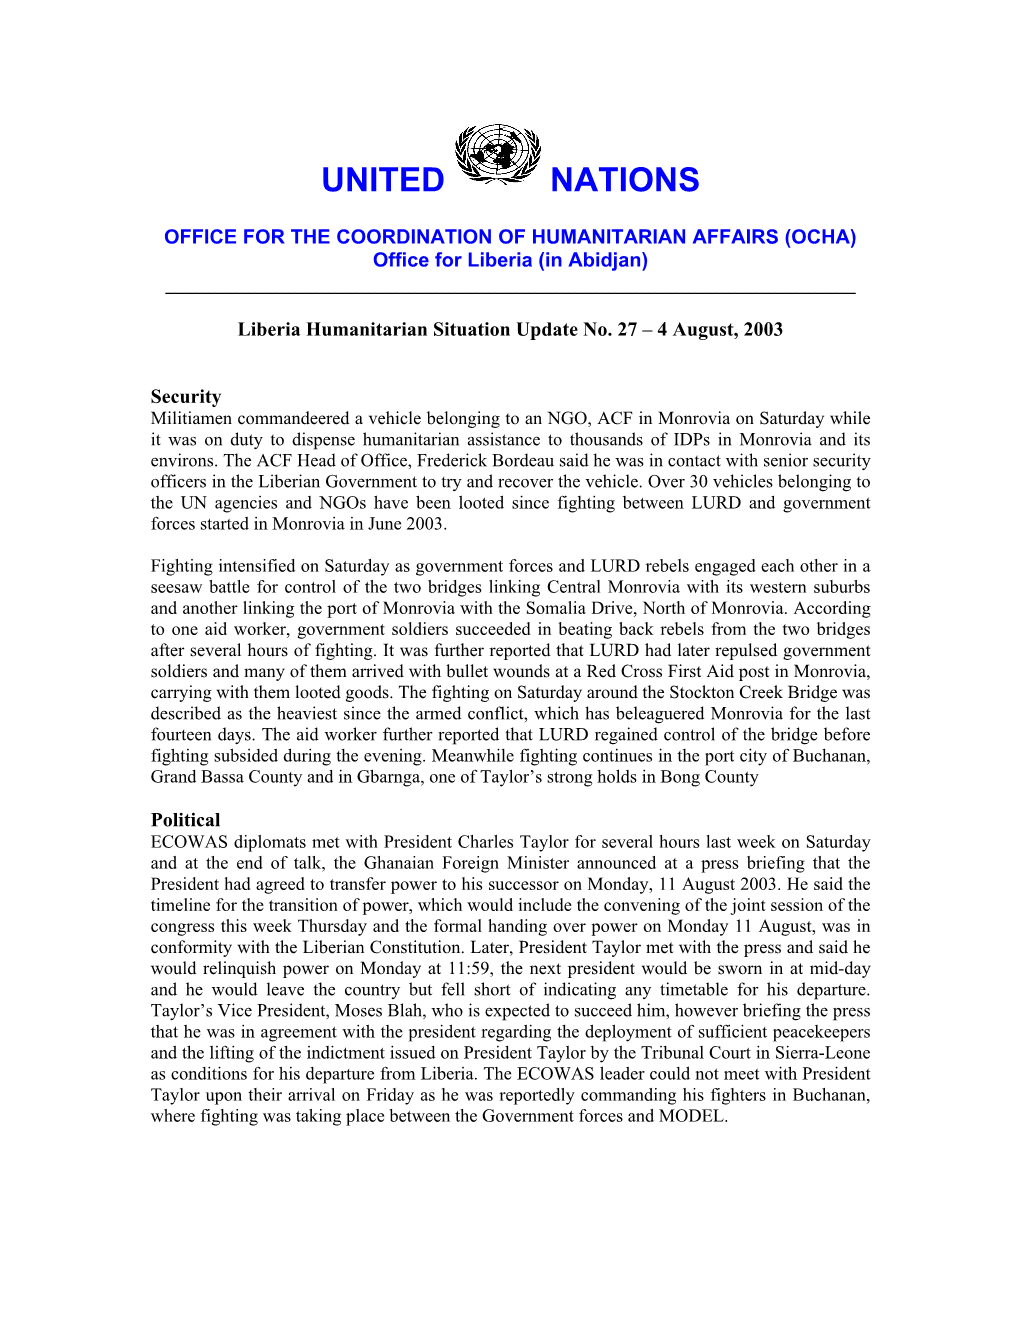 Liberia Humanitarian Update No. 27 4 August 2003